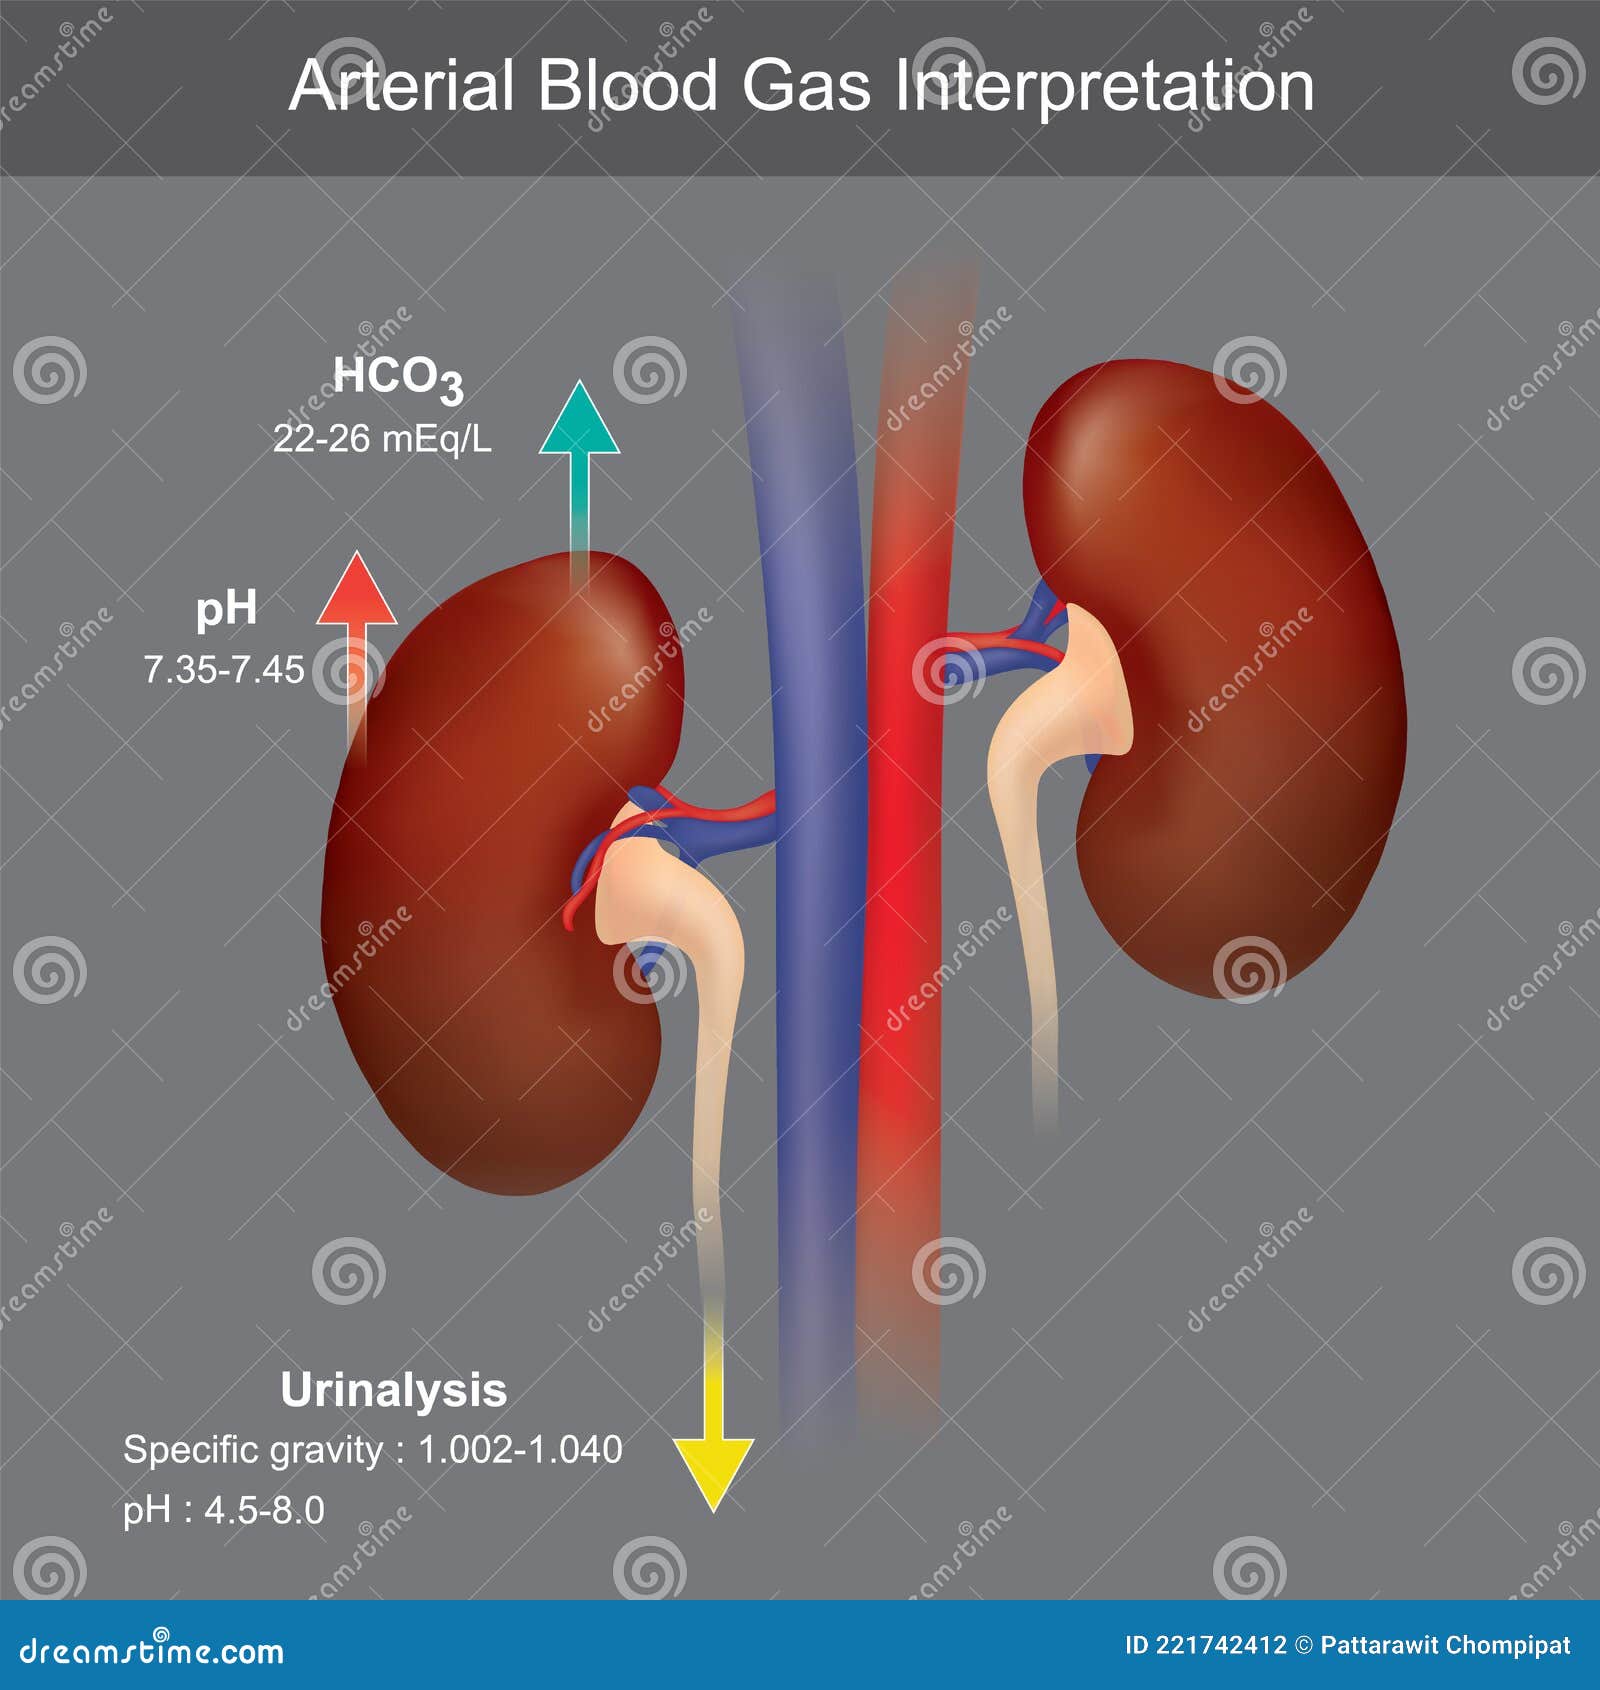 arterial blood gas interpretation. 